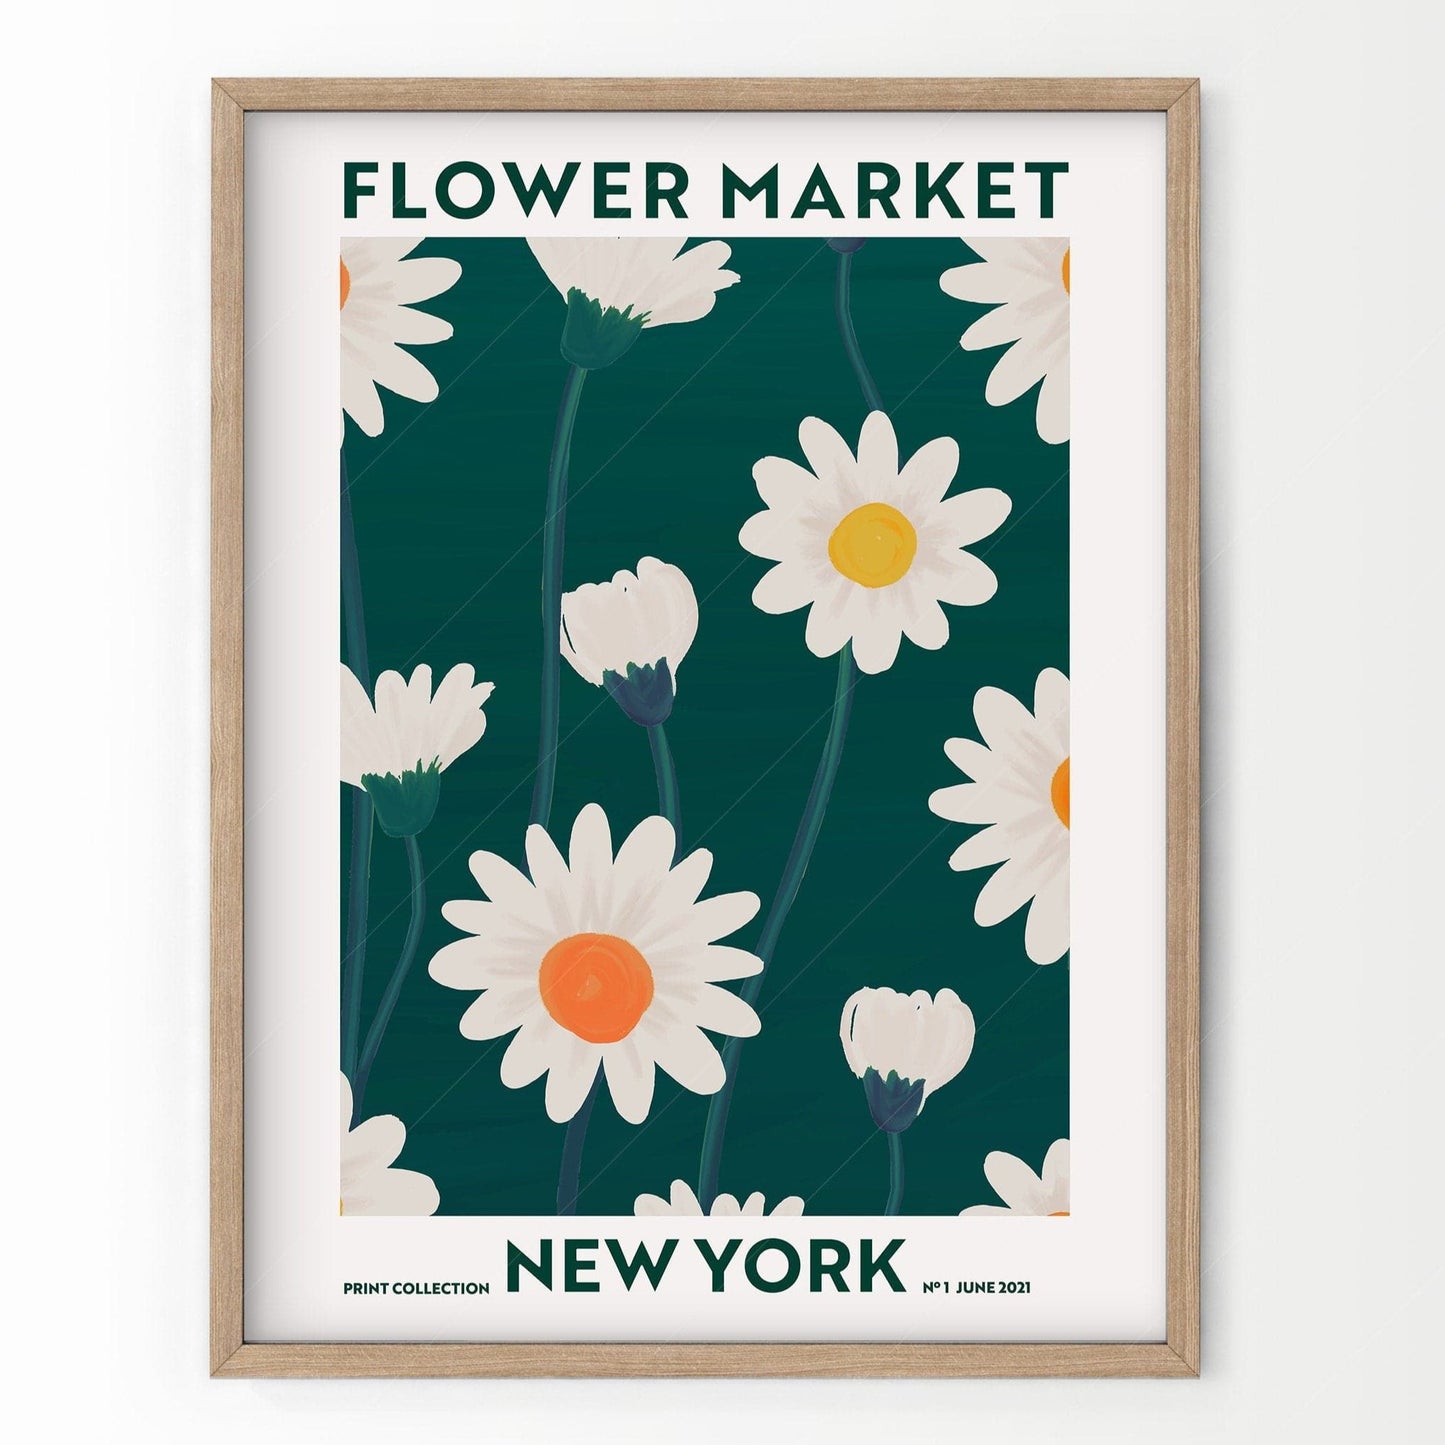 Home Poster Decor Single Flower Market New York, New York Wall Art, Floral Wall Decor, New York Poster, Flower Art Print, Gift Idea, Flower Market Printed Shipped